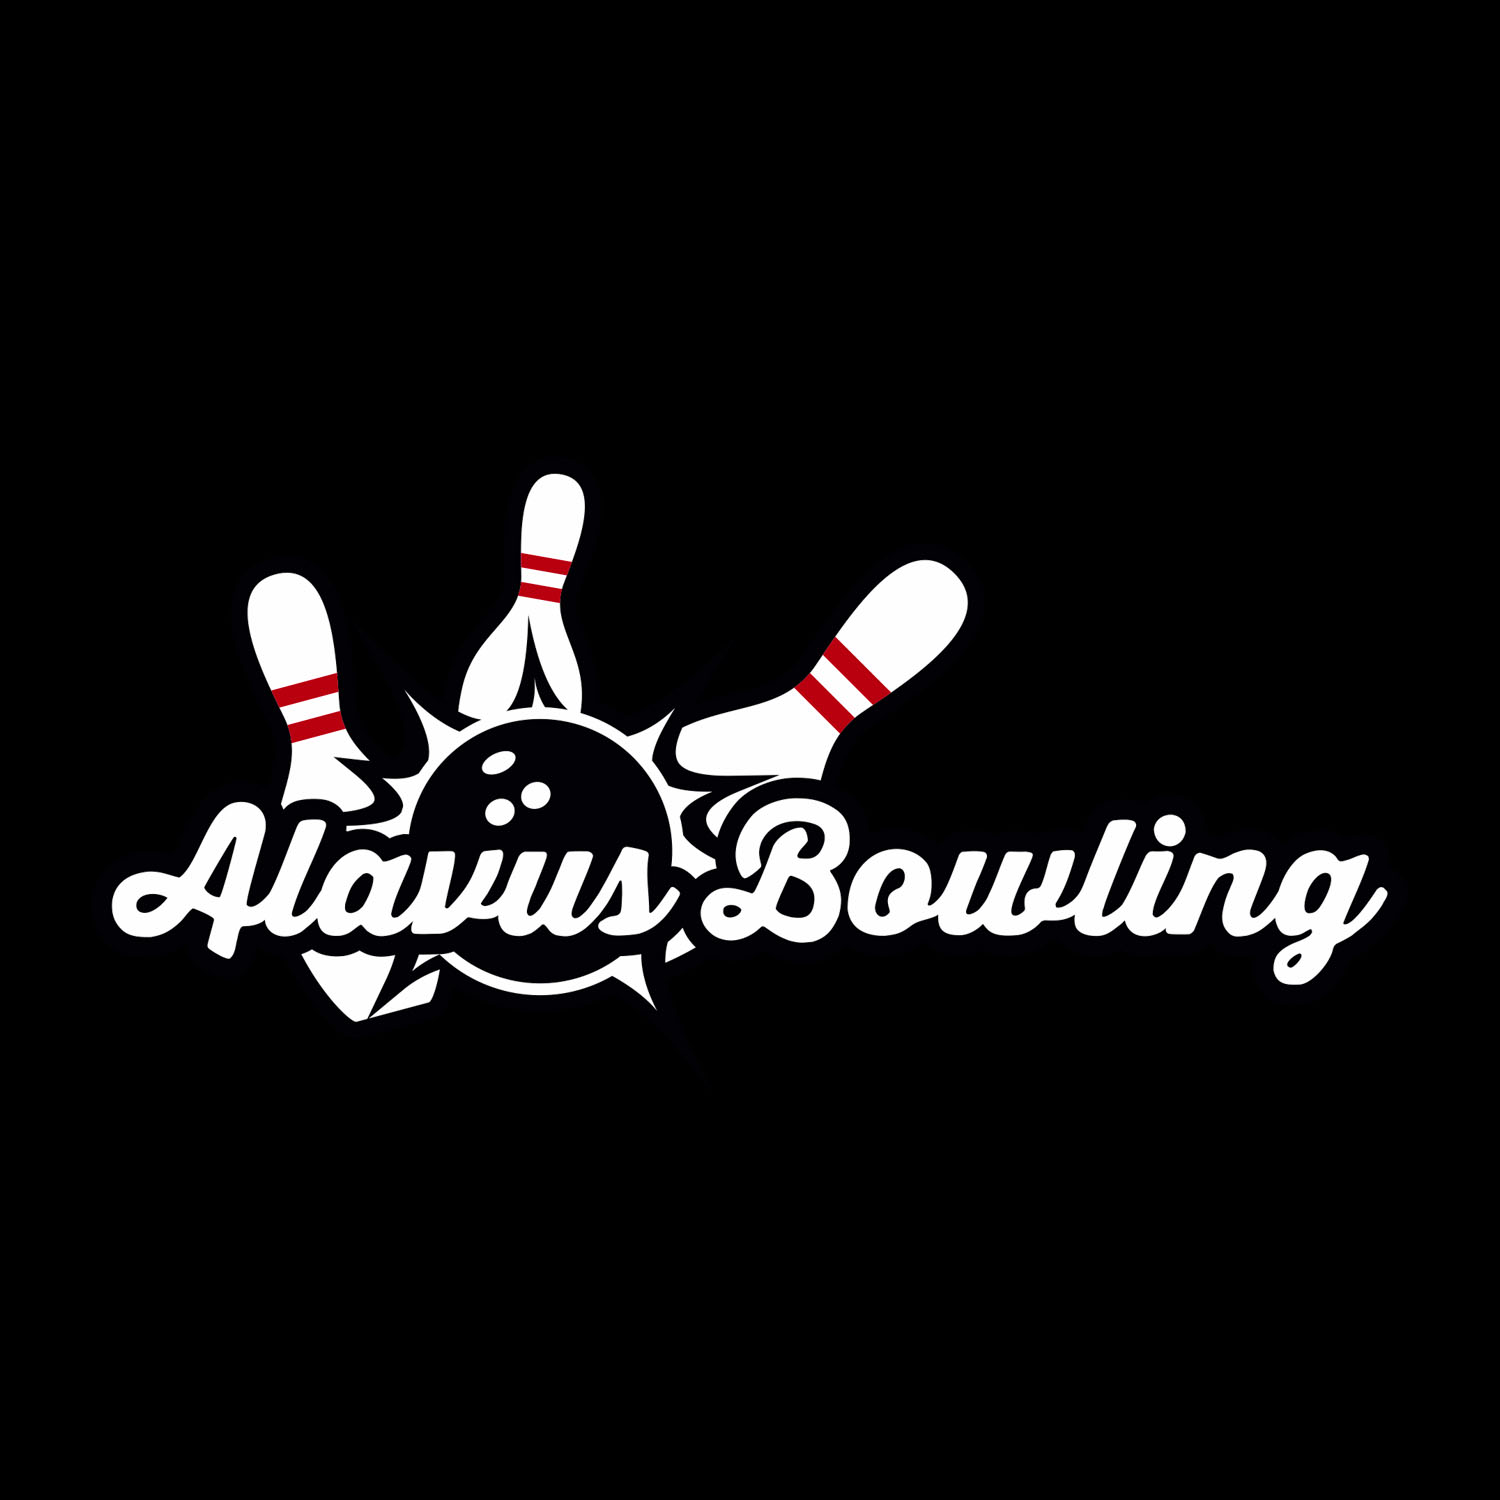 Logo, Alavus Bowling, made by Therwiz Design